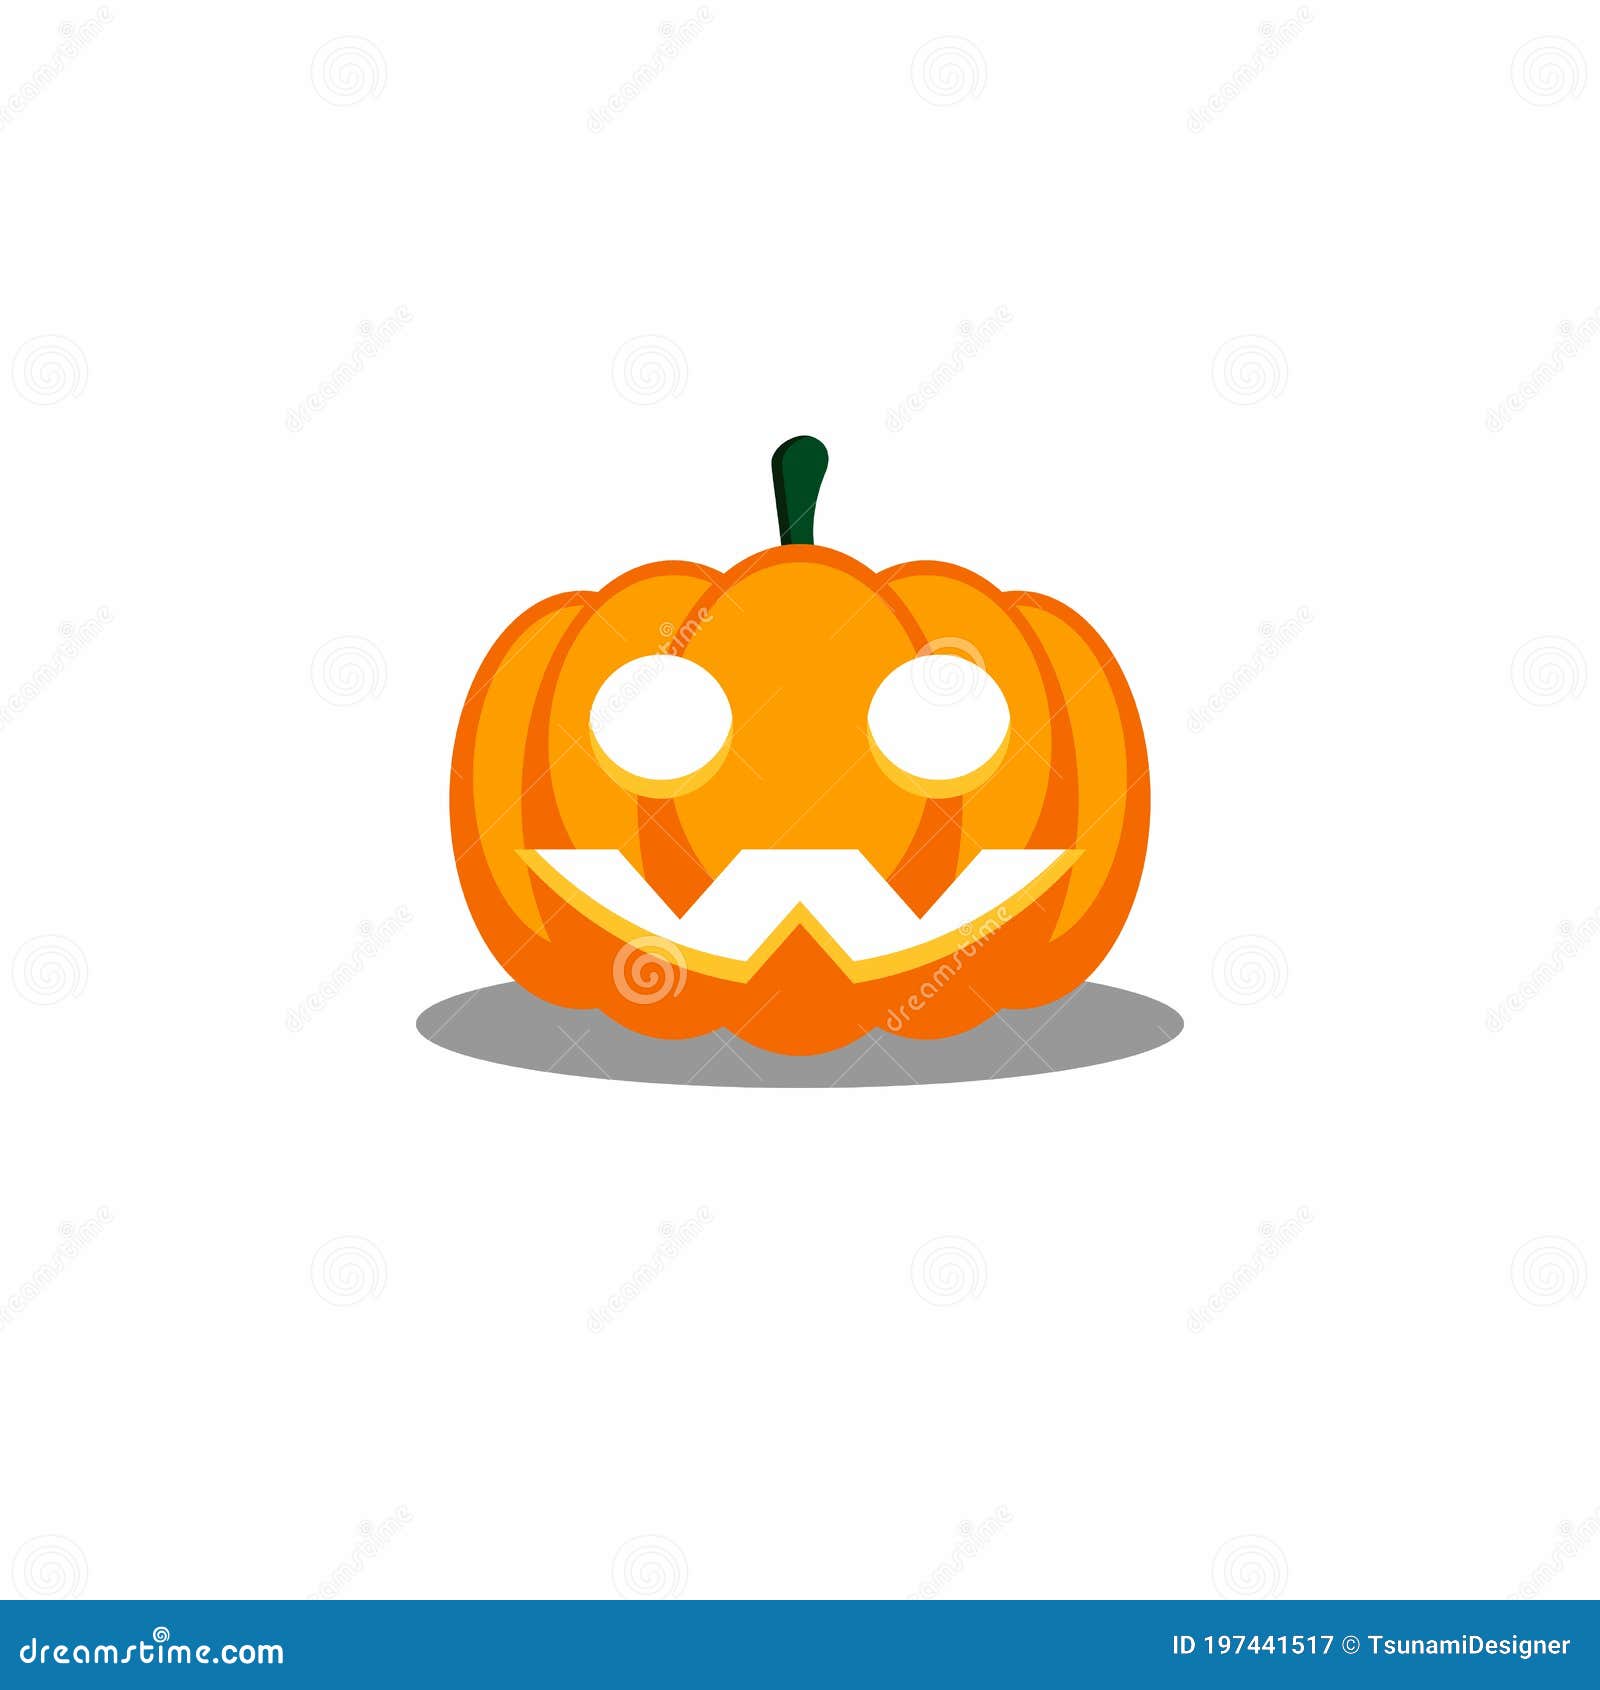 Halloween Pumpkin, Scary or Spooky Creepy Pumpkins, Halloween Holiday ...